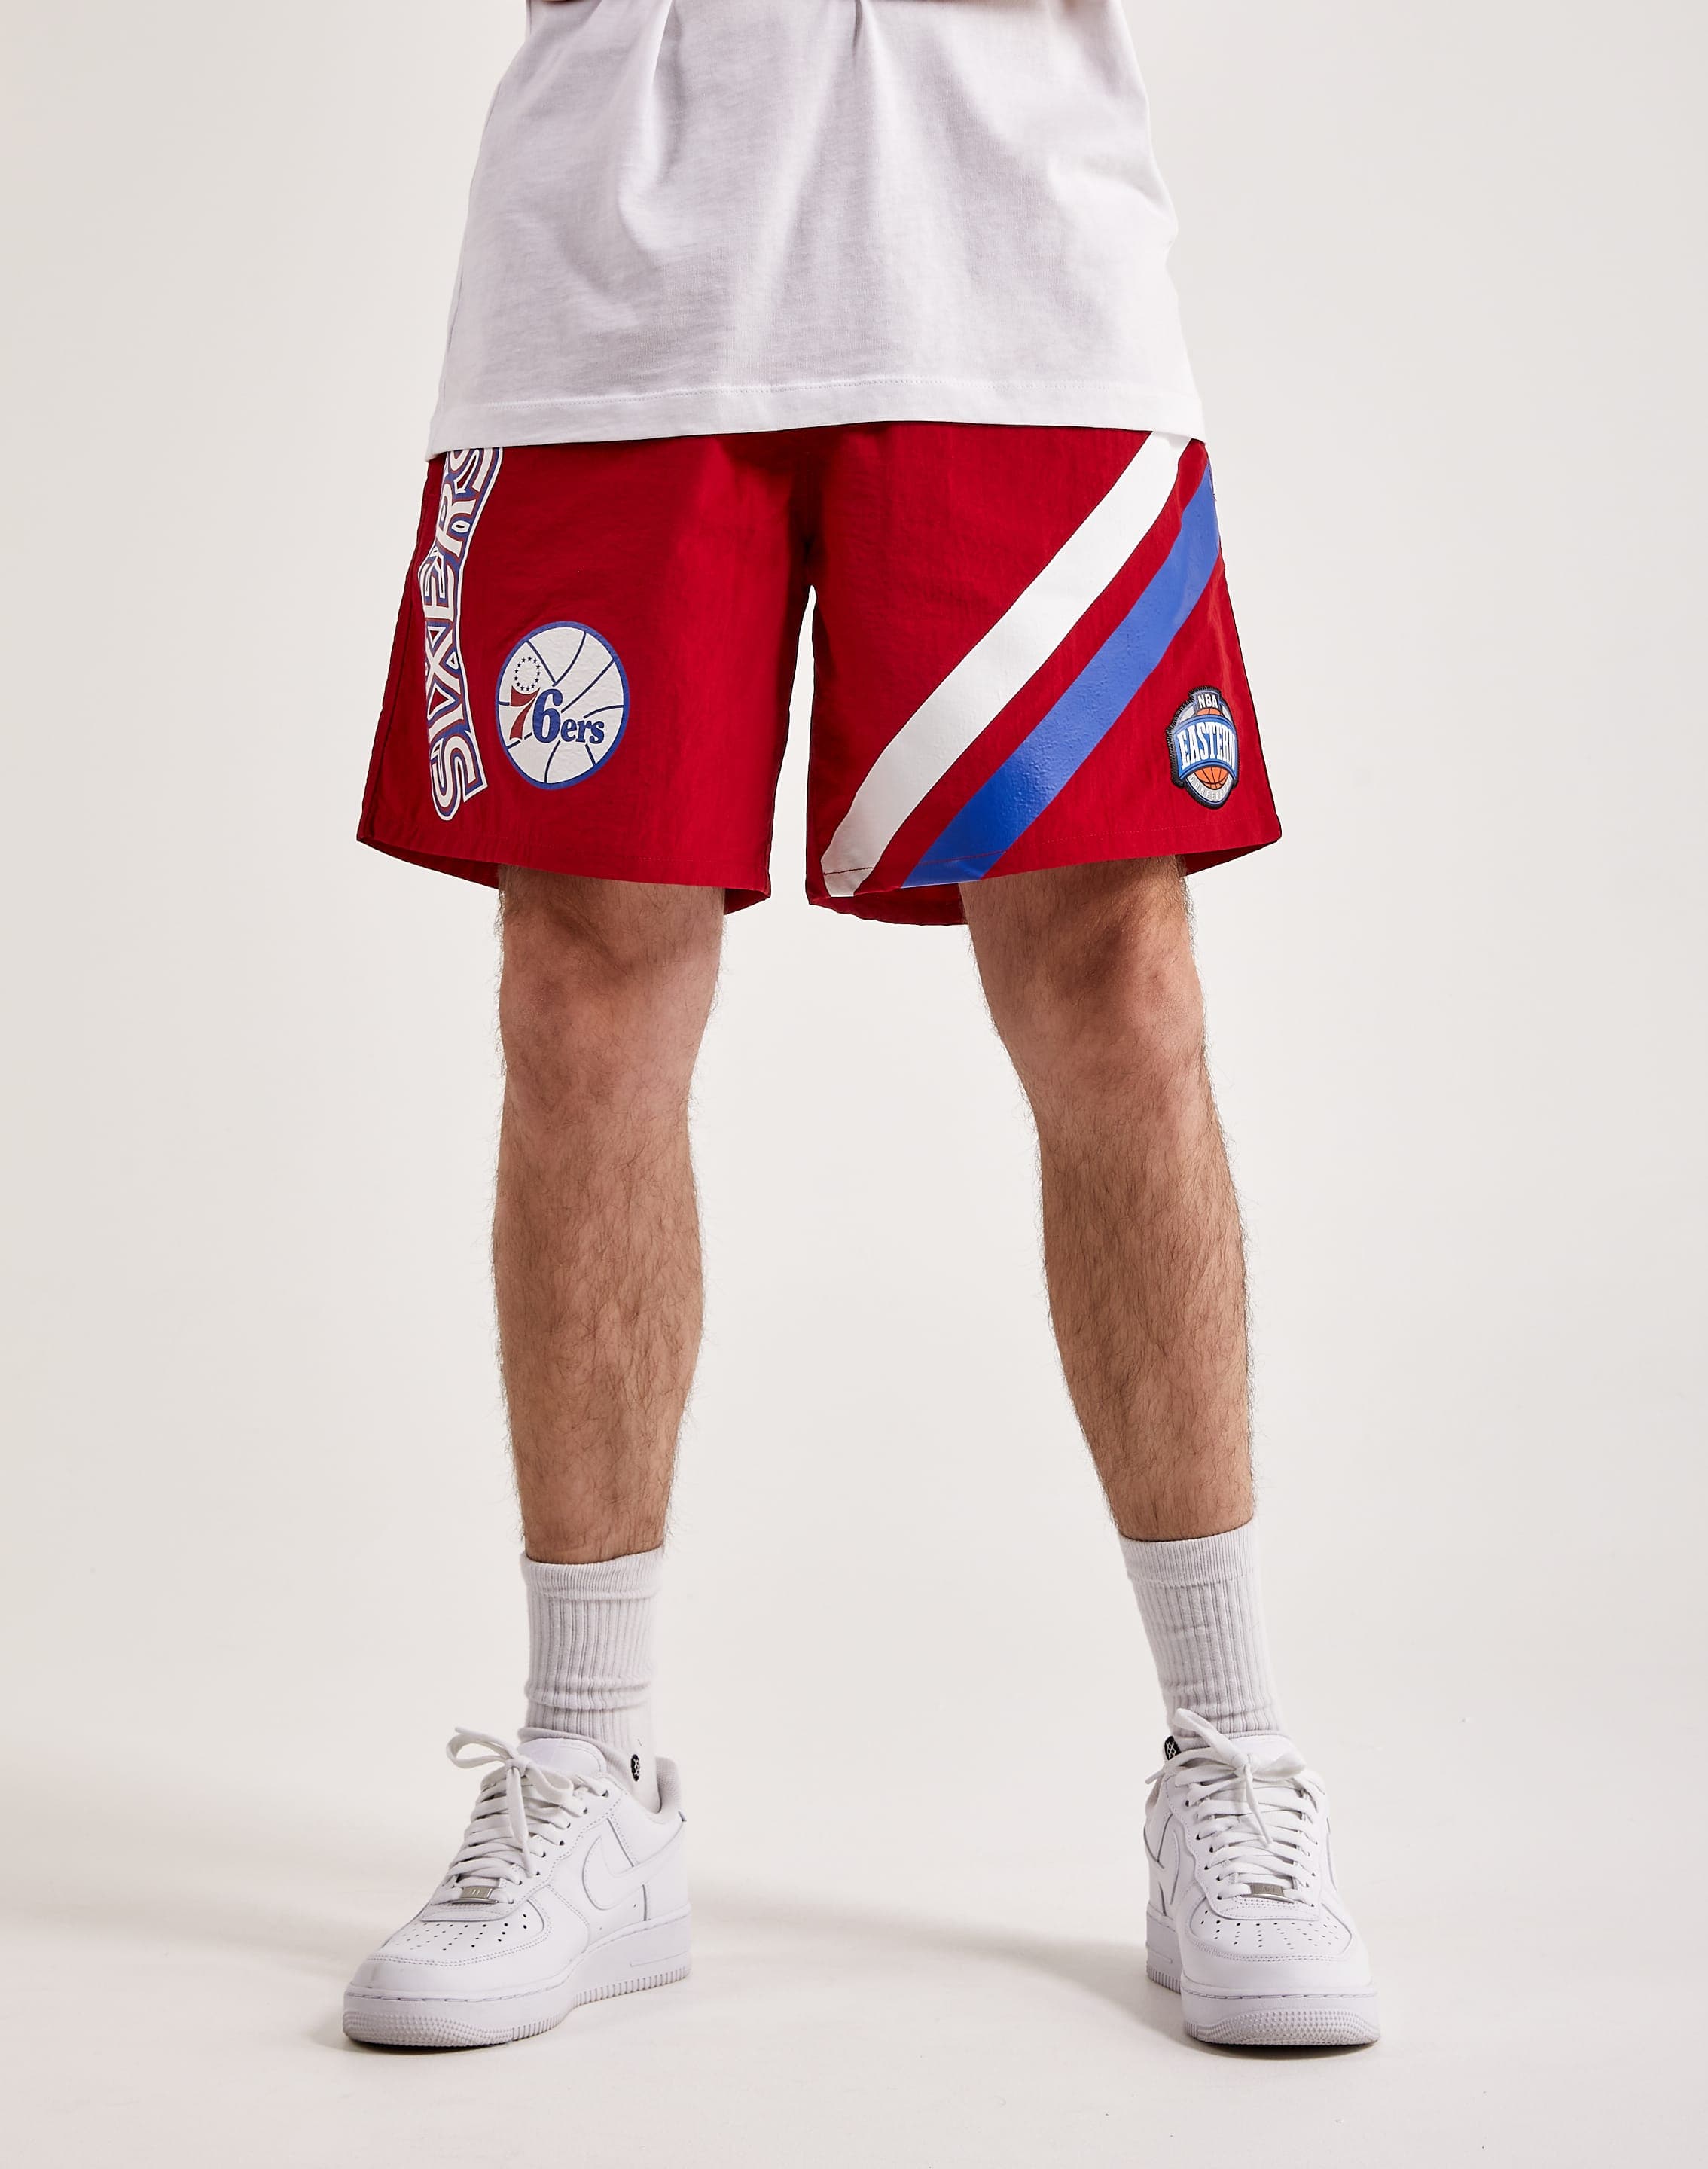 white 76ers shorts